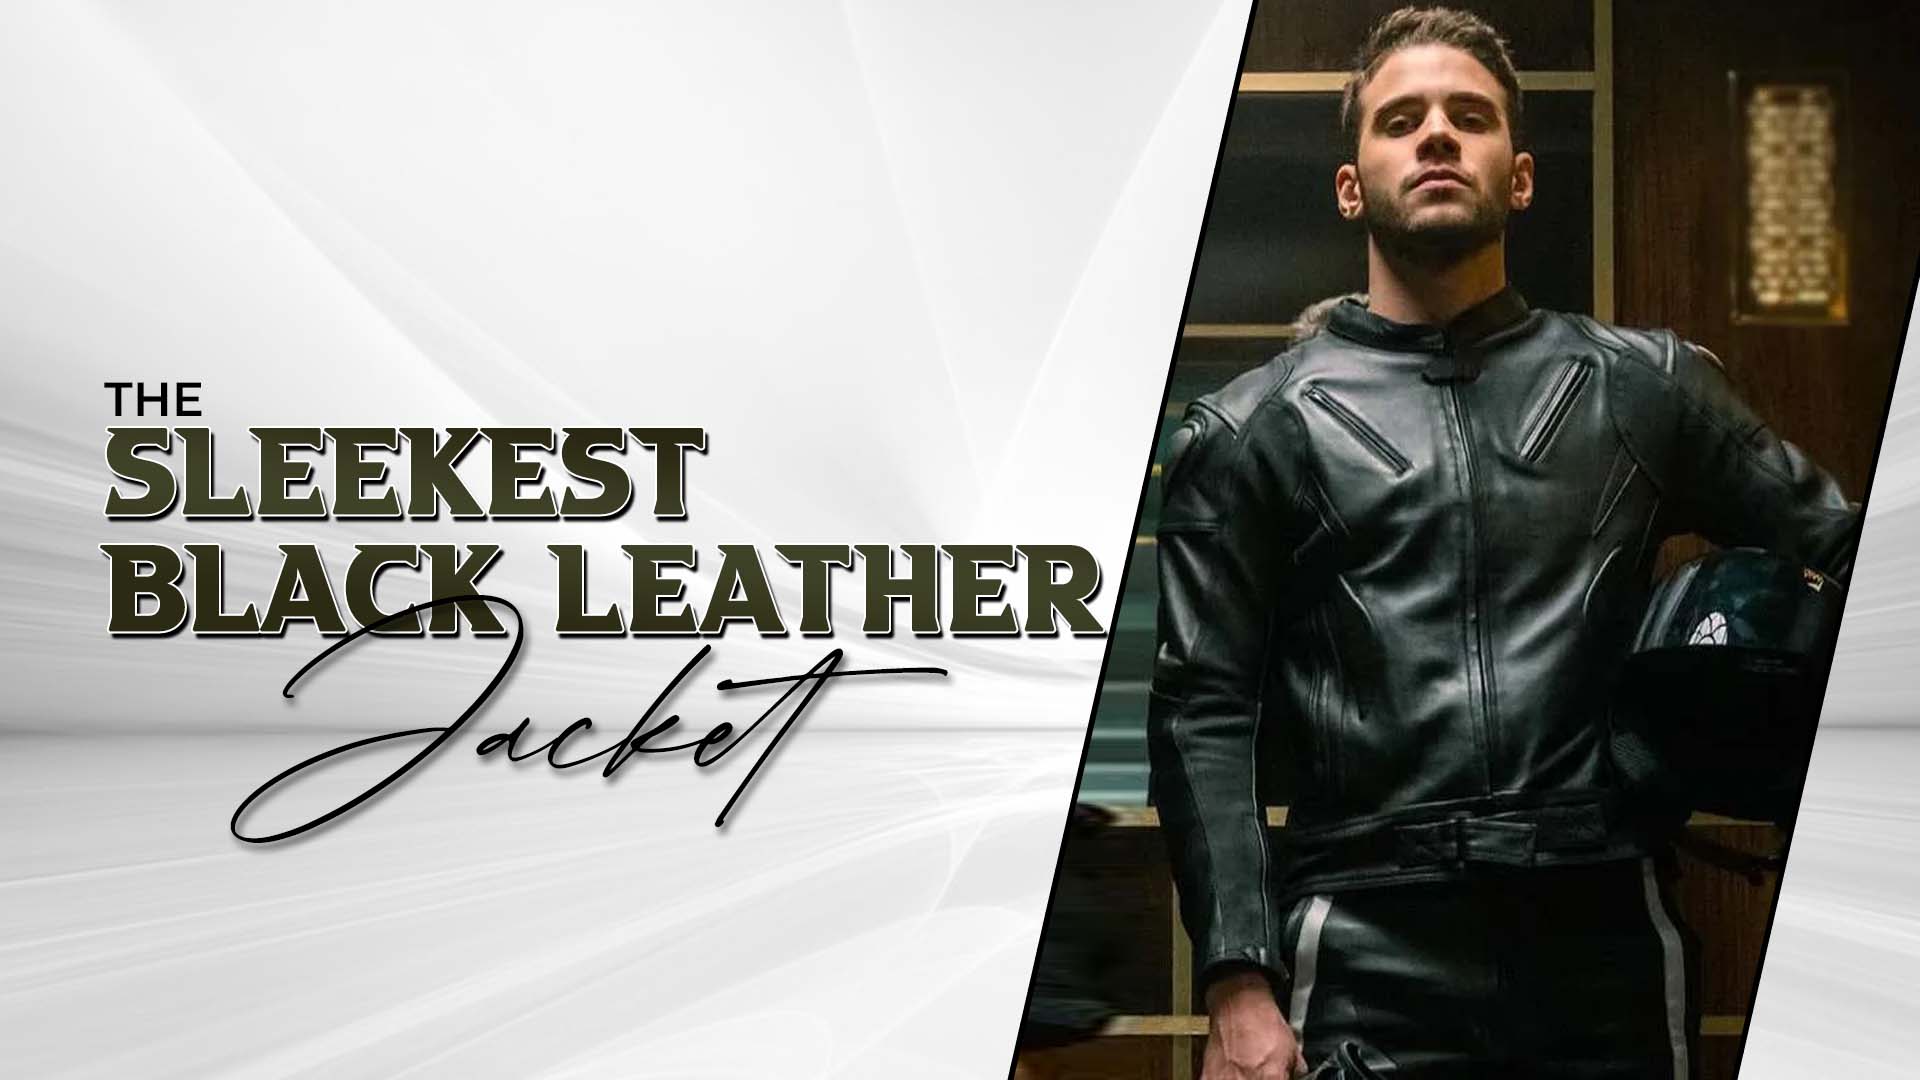 The Sleekest Black Leather Jacket